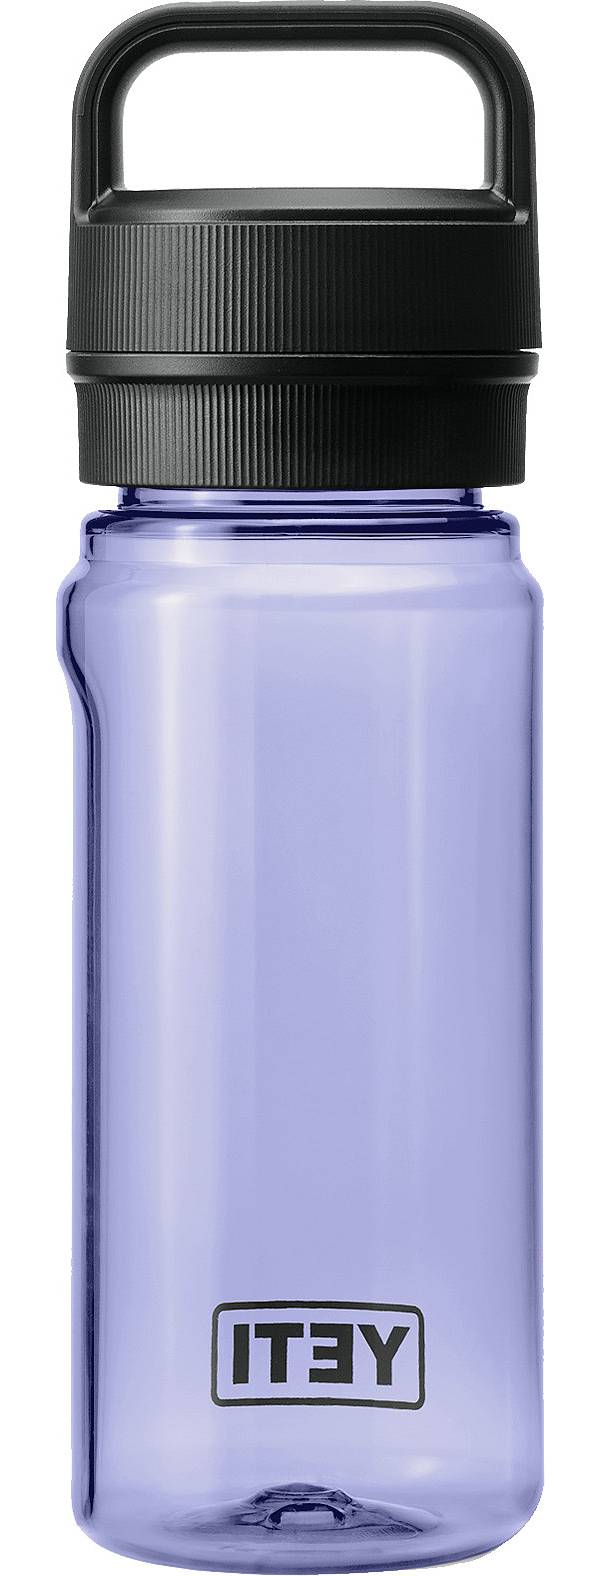 Yeti Rambler Beverage Bucket with Lid - Cosmic Lilac